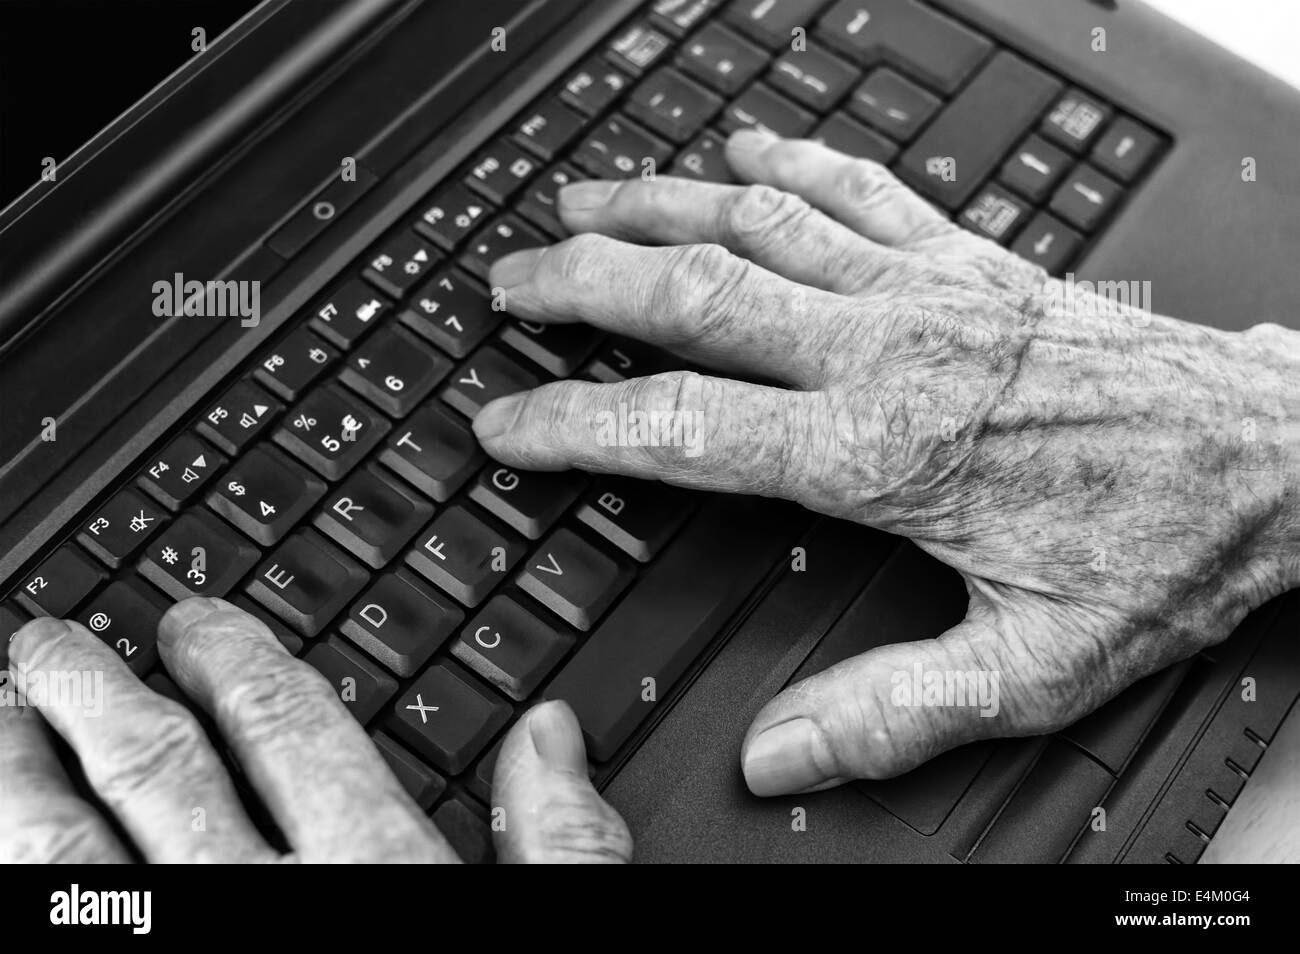 Closeup on elderly hands on keyboard of laptop. Stock Photo